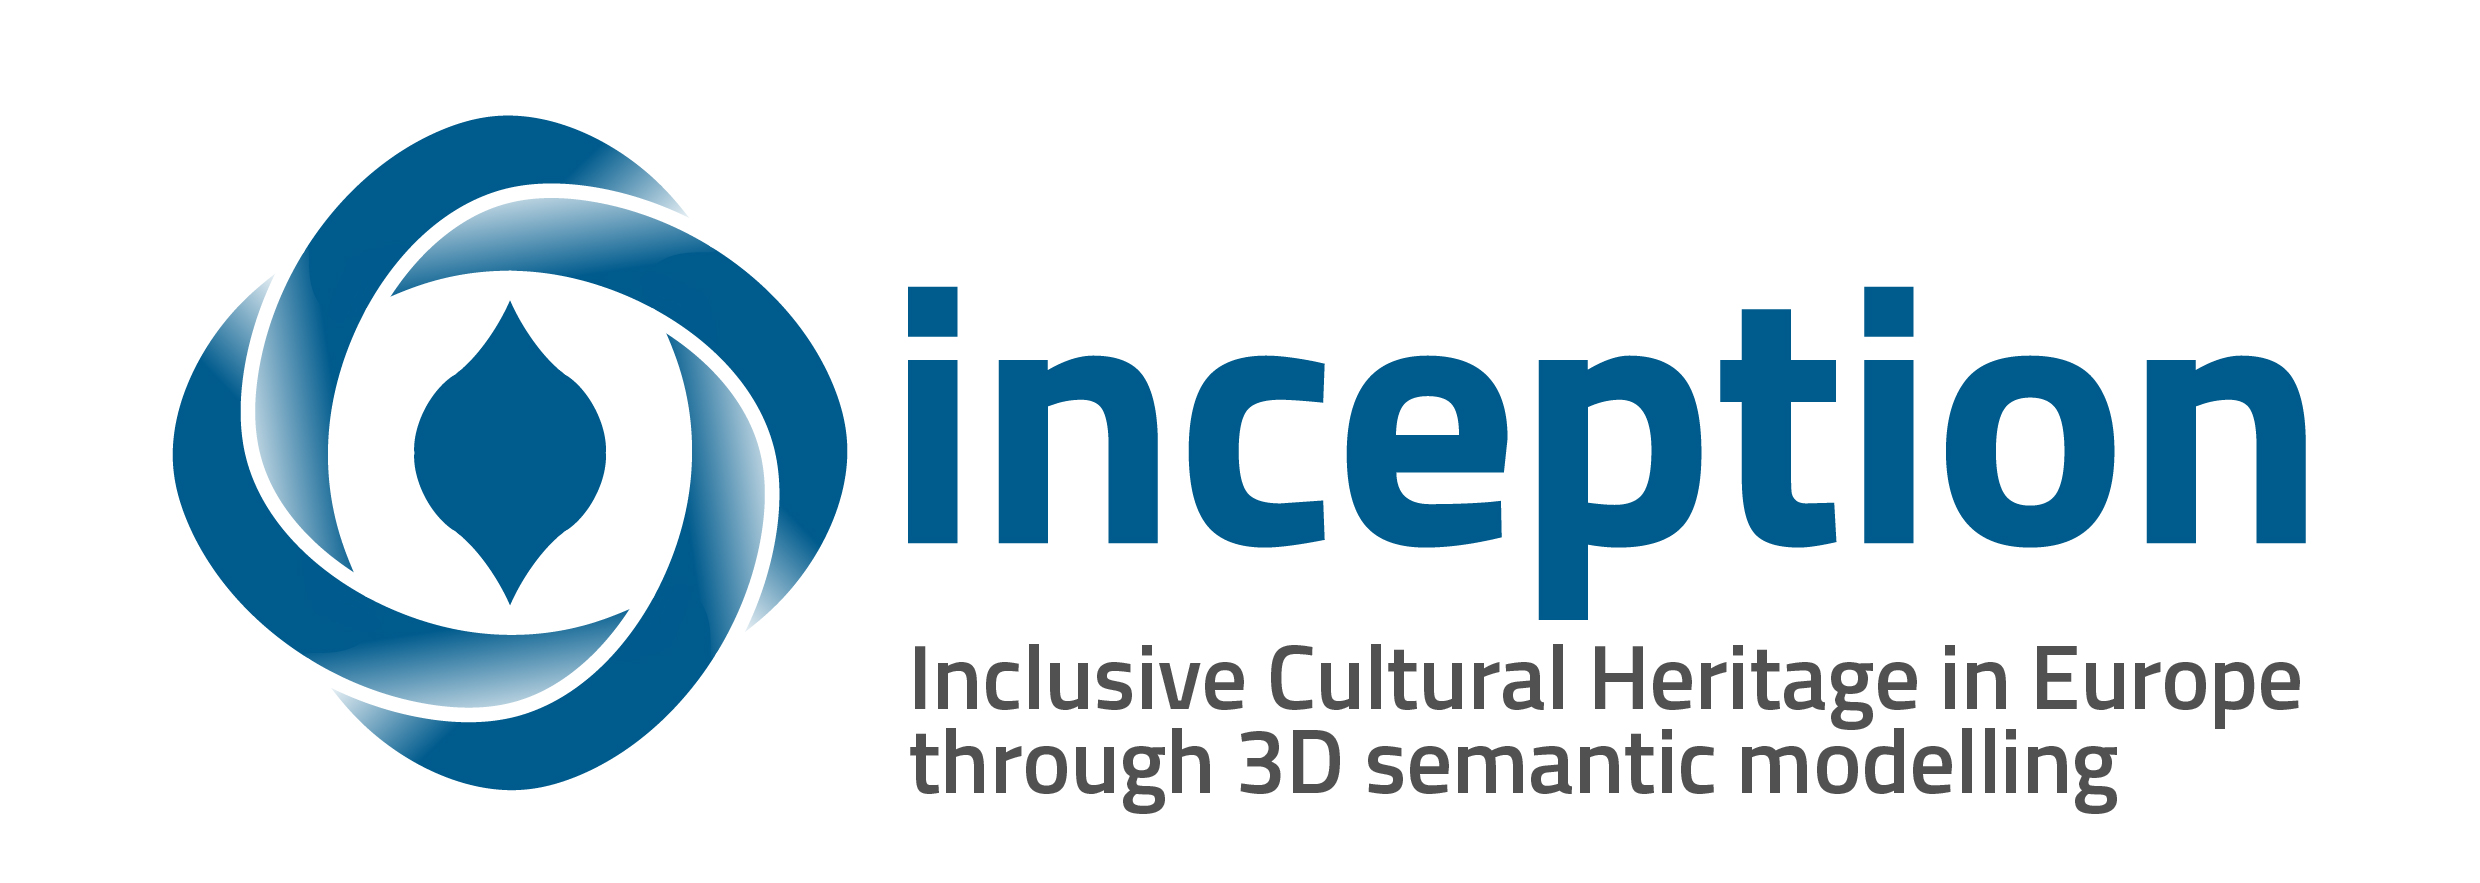 inception logo